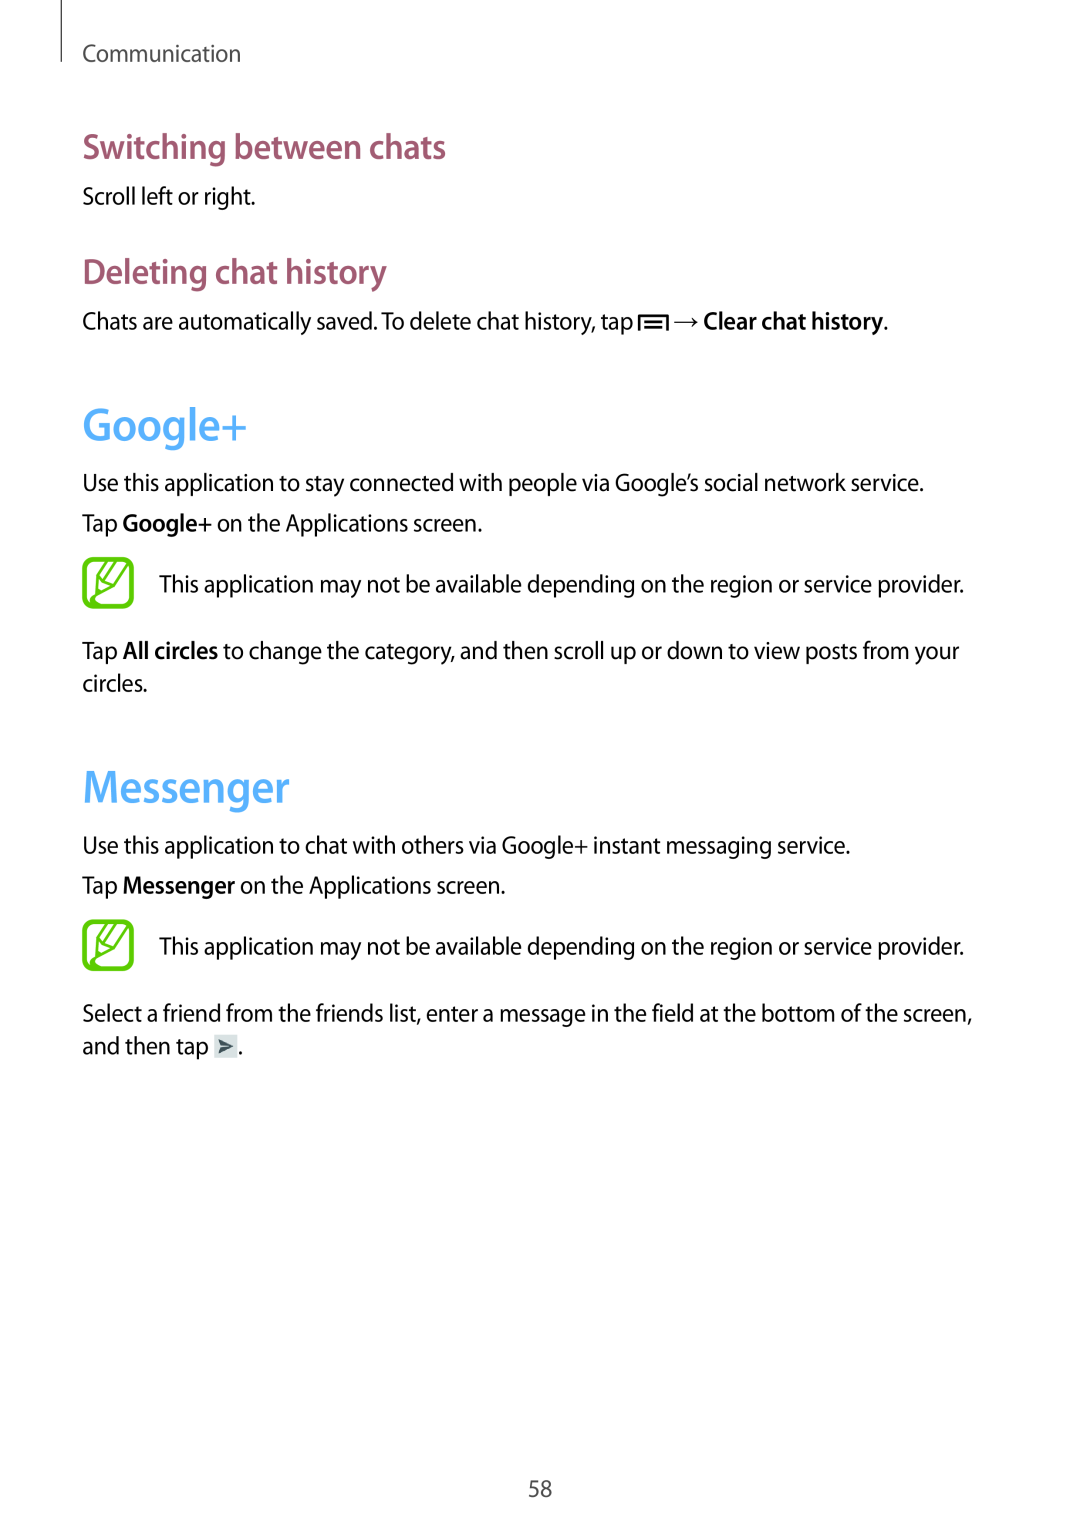 Samsung GT-I8190RWNO2C, GT-I8190RWNDTM Google+, Messenger, Switching between chats, Deleting chat history, Communication 